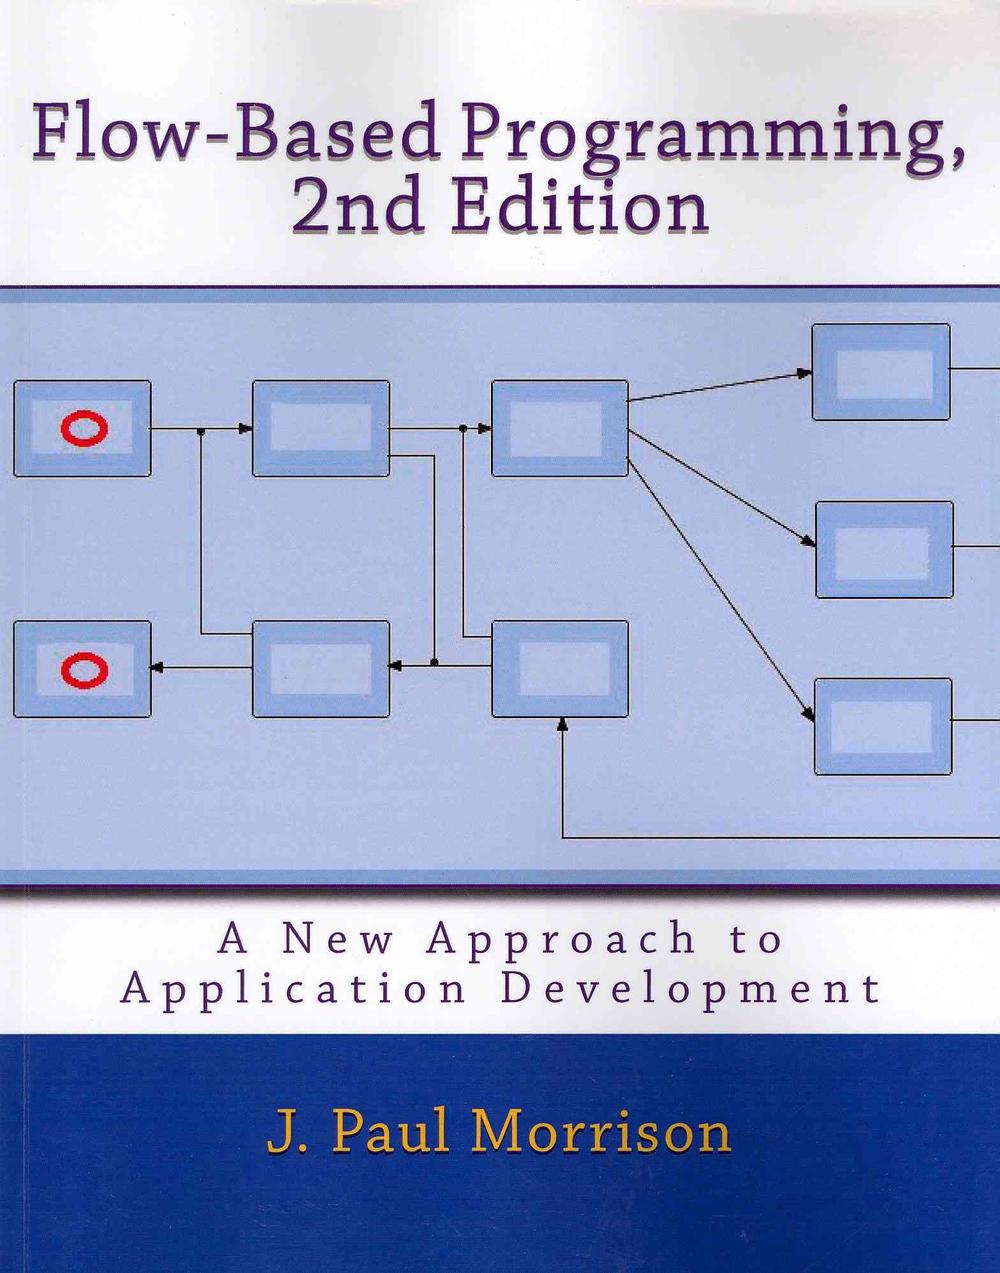 Program flow. Flow based Programming. Flow в программировании. Программирование Flow Boss. Flowbase Programming.